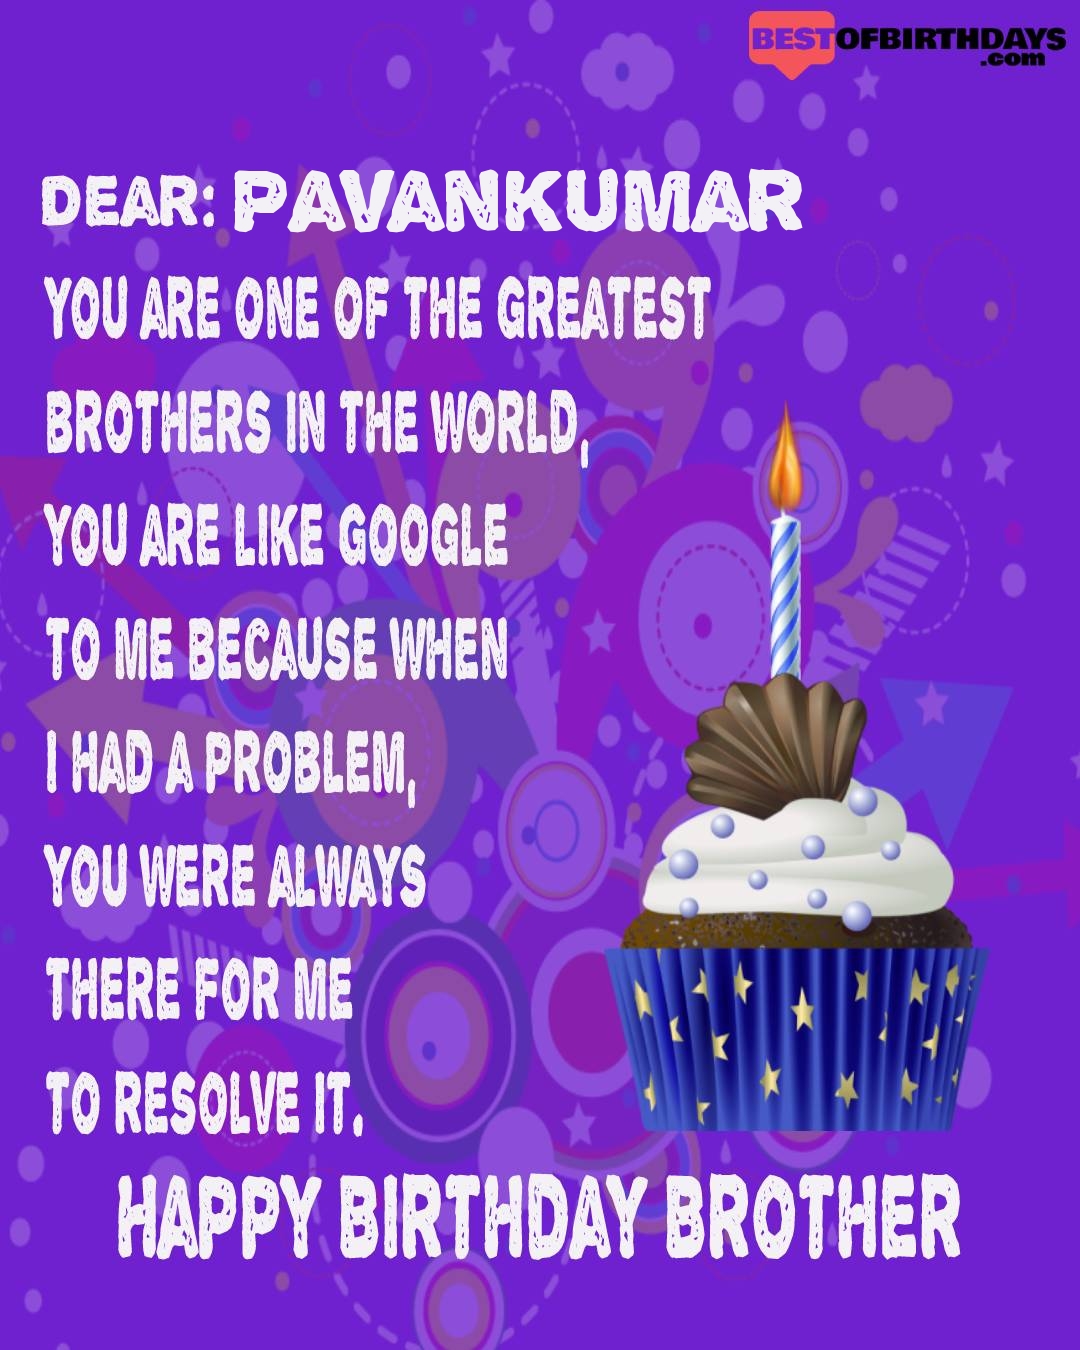 Happy birthday pavankumar bhai brother bro